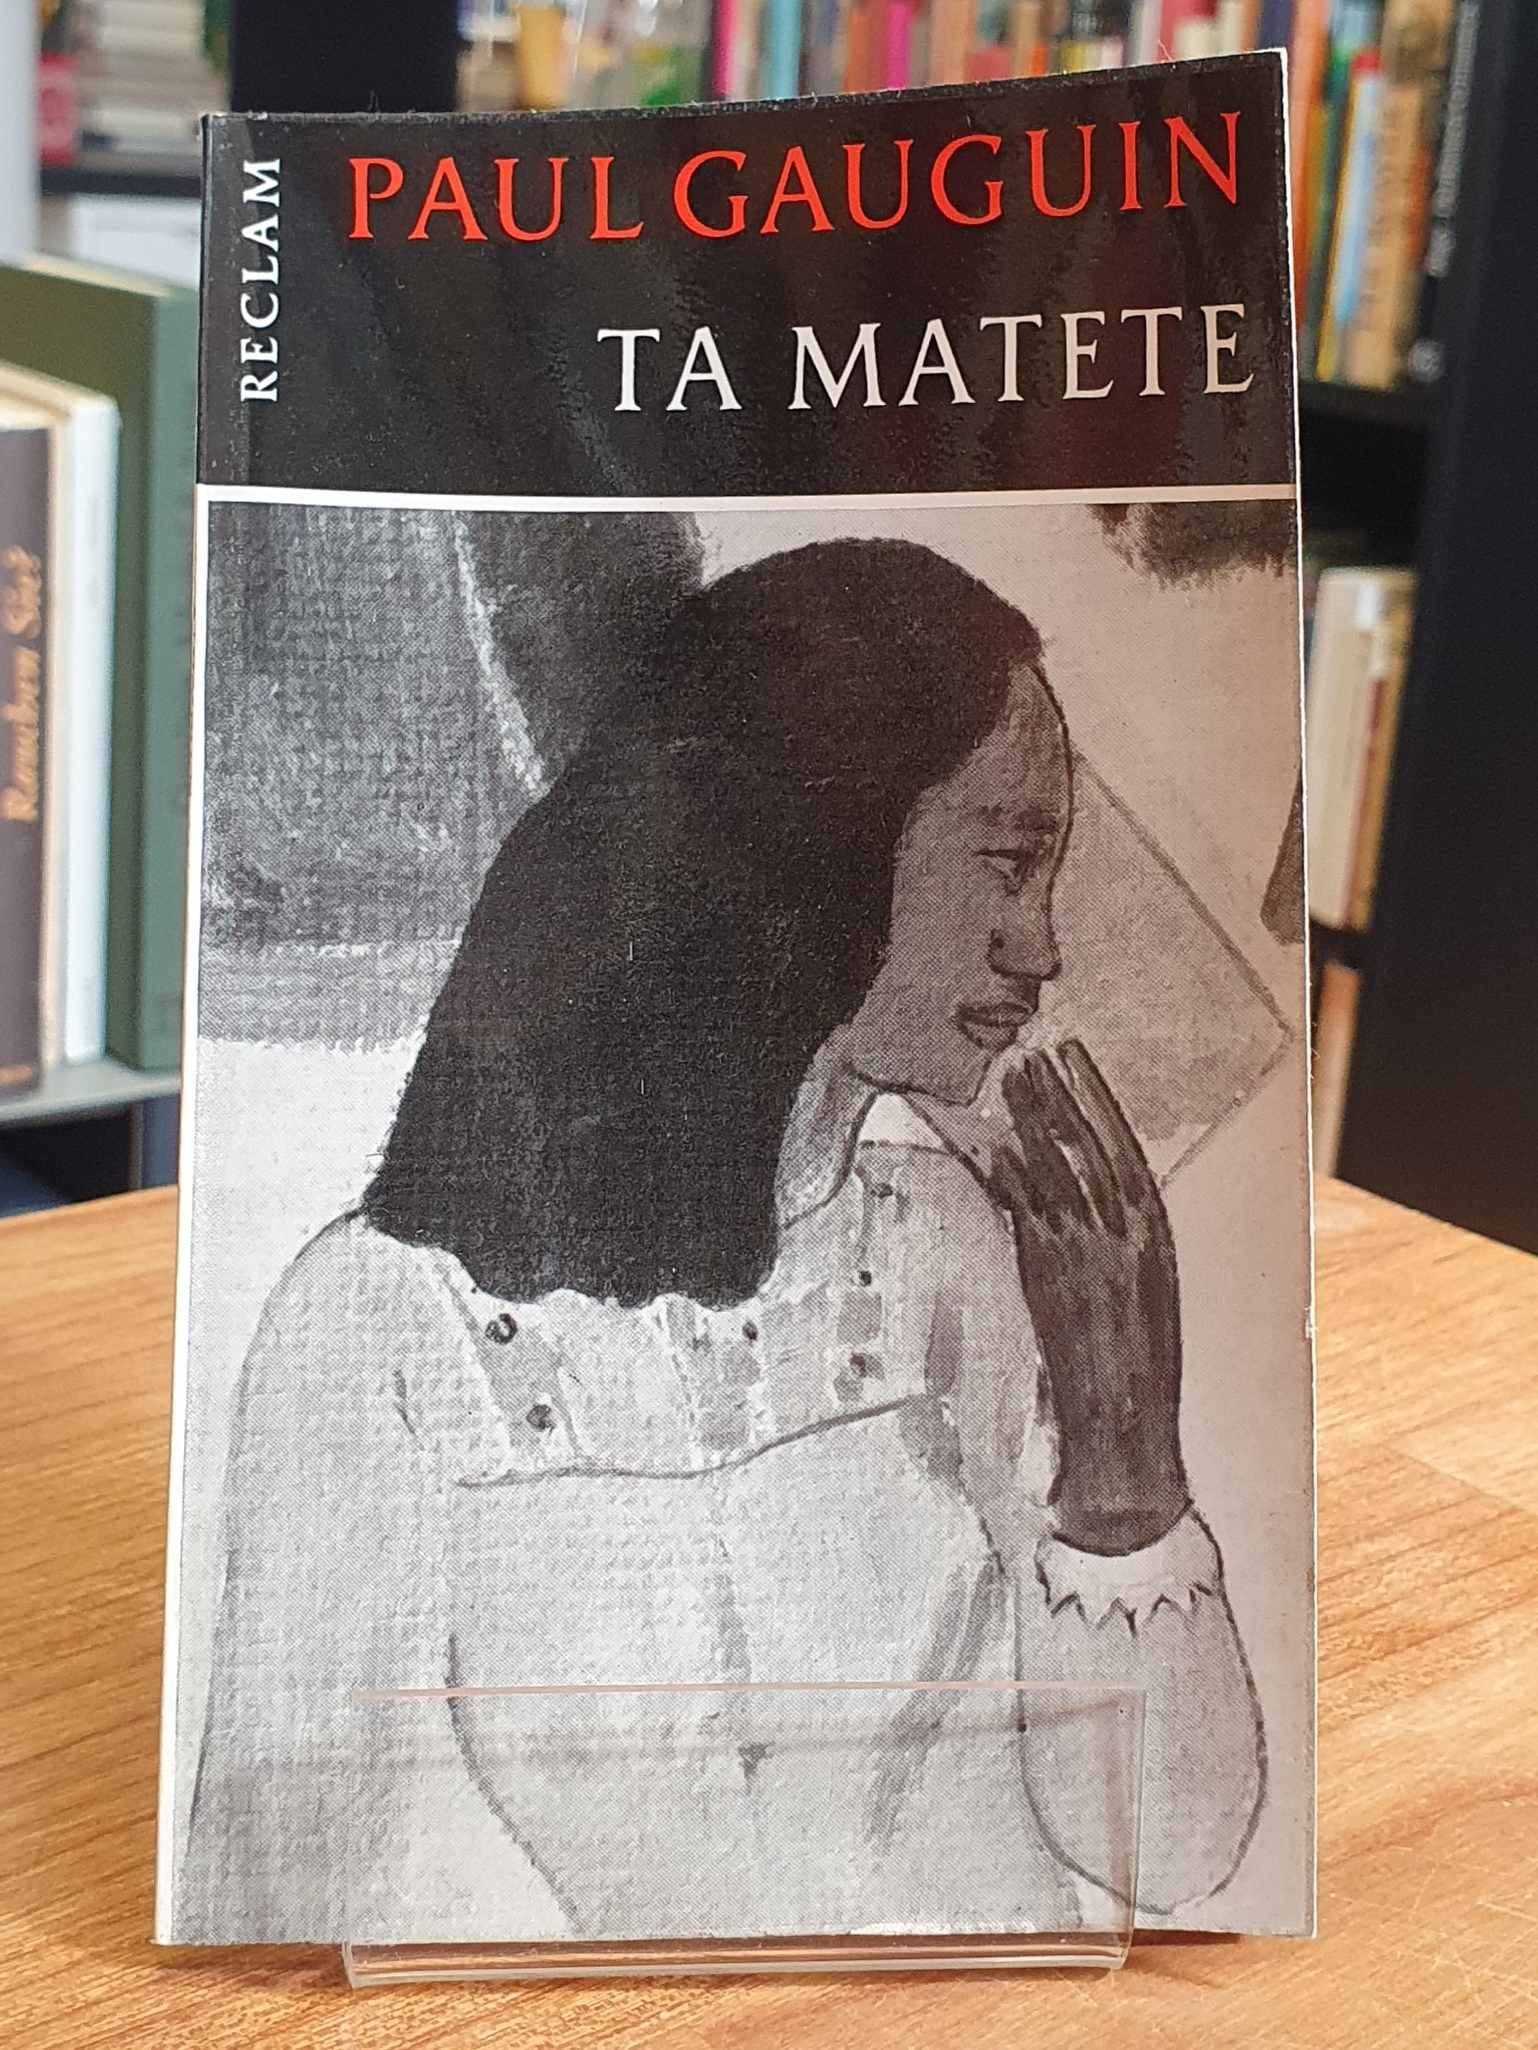 Gauguin, Paul Gauguin: Ta Matete – Der Markt,